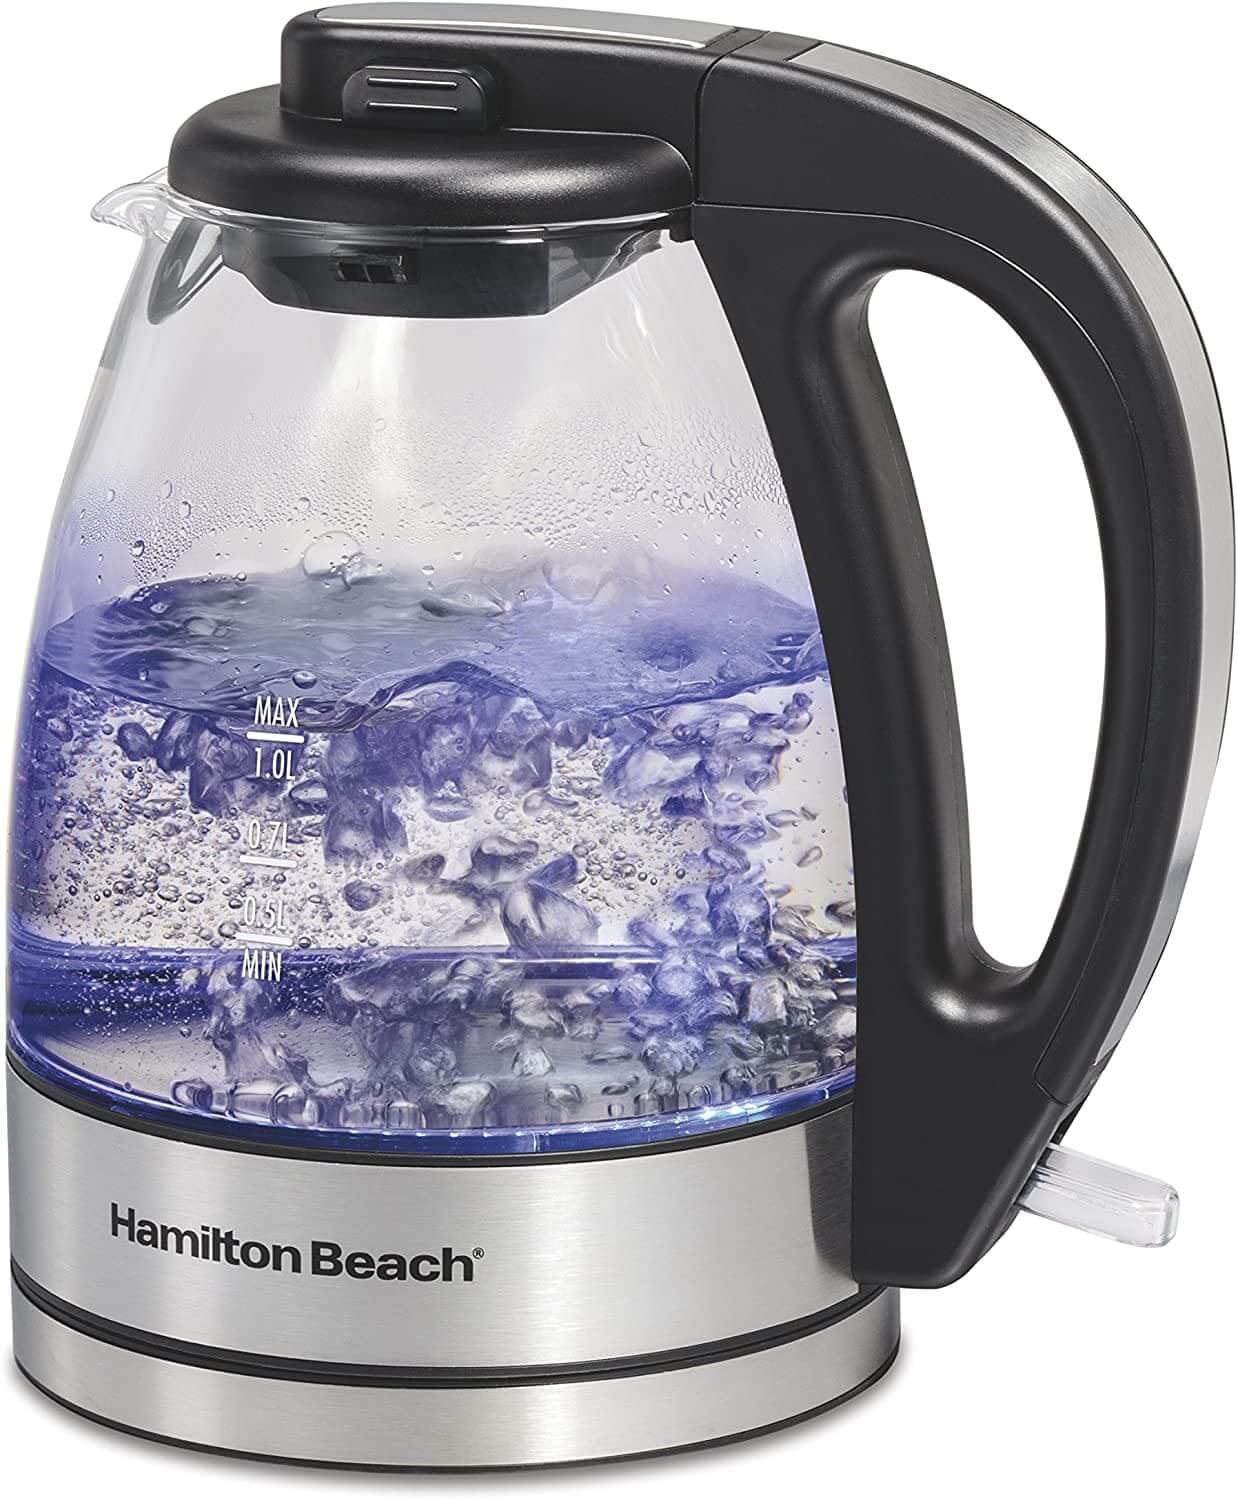 https://www.collegeraptor.com/wp/wp-content/uploads/2019/04/hamilton-tea-kettle.jpg